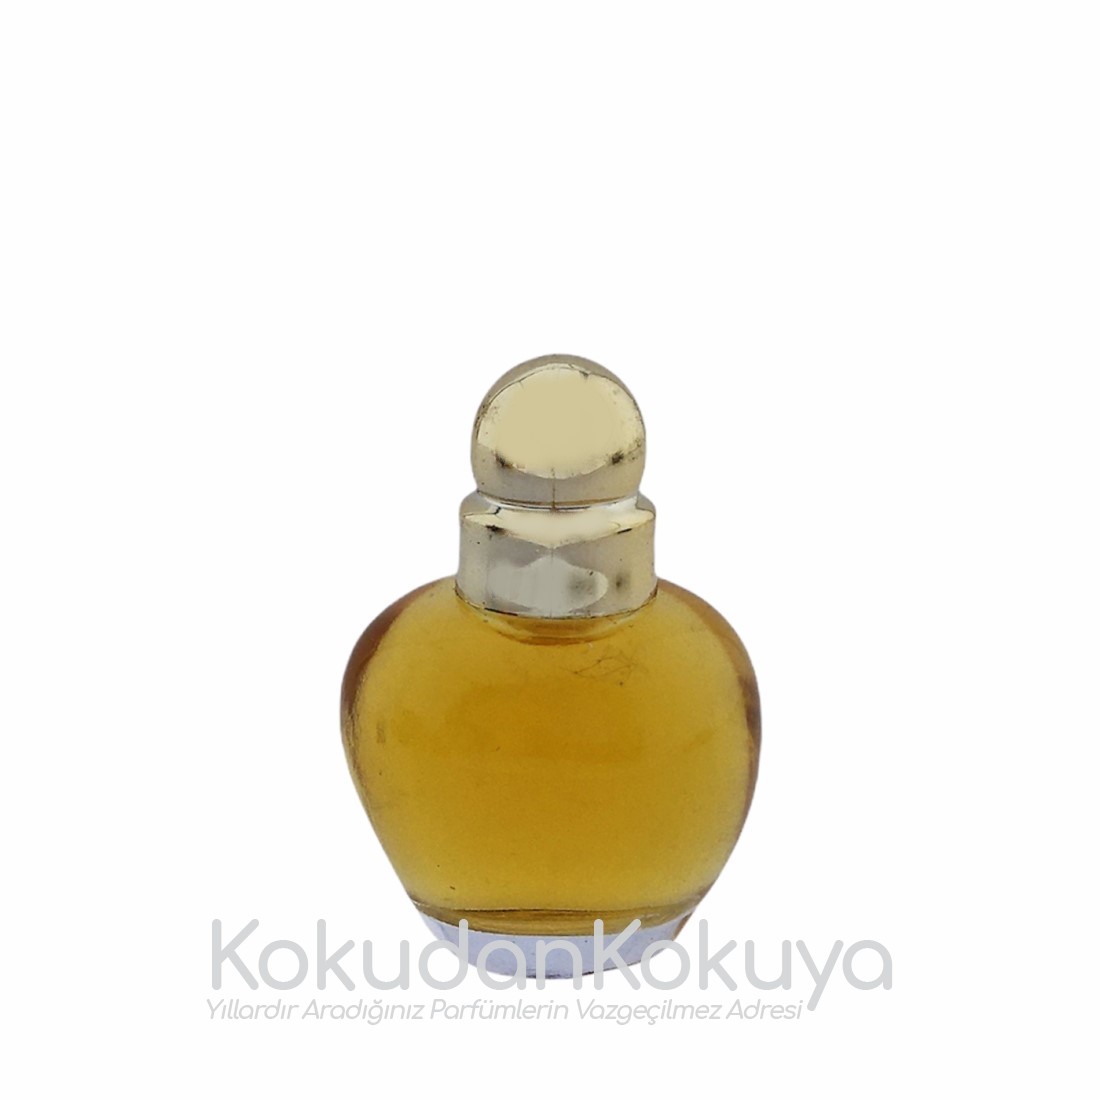 JOOP All About Eve (Vintage) Parfüm Kadın 5ml Minyatür (Mini Perfume) Dökme 